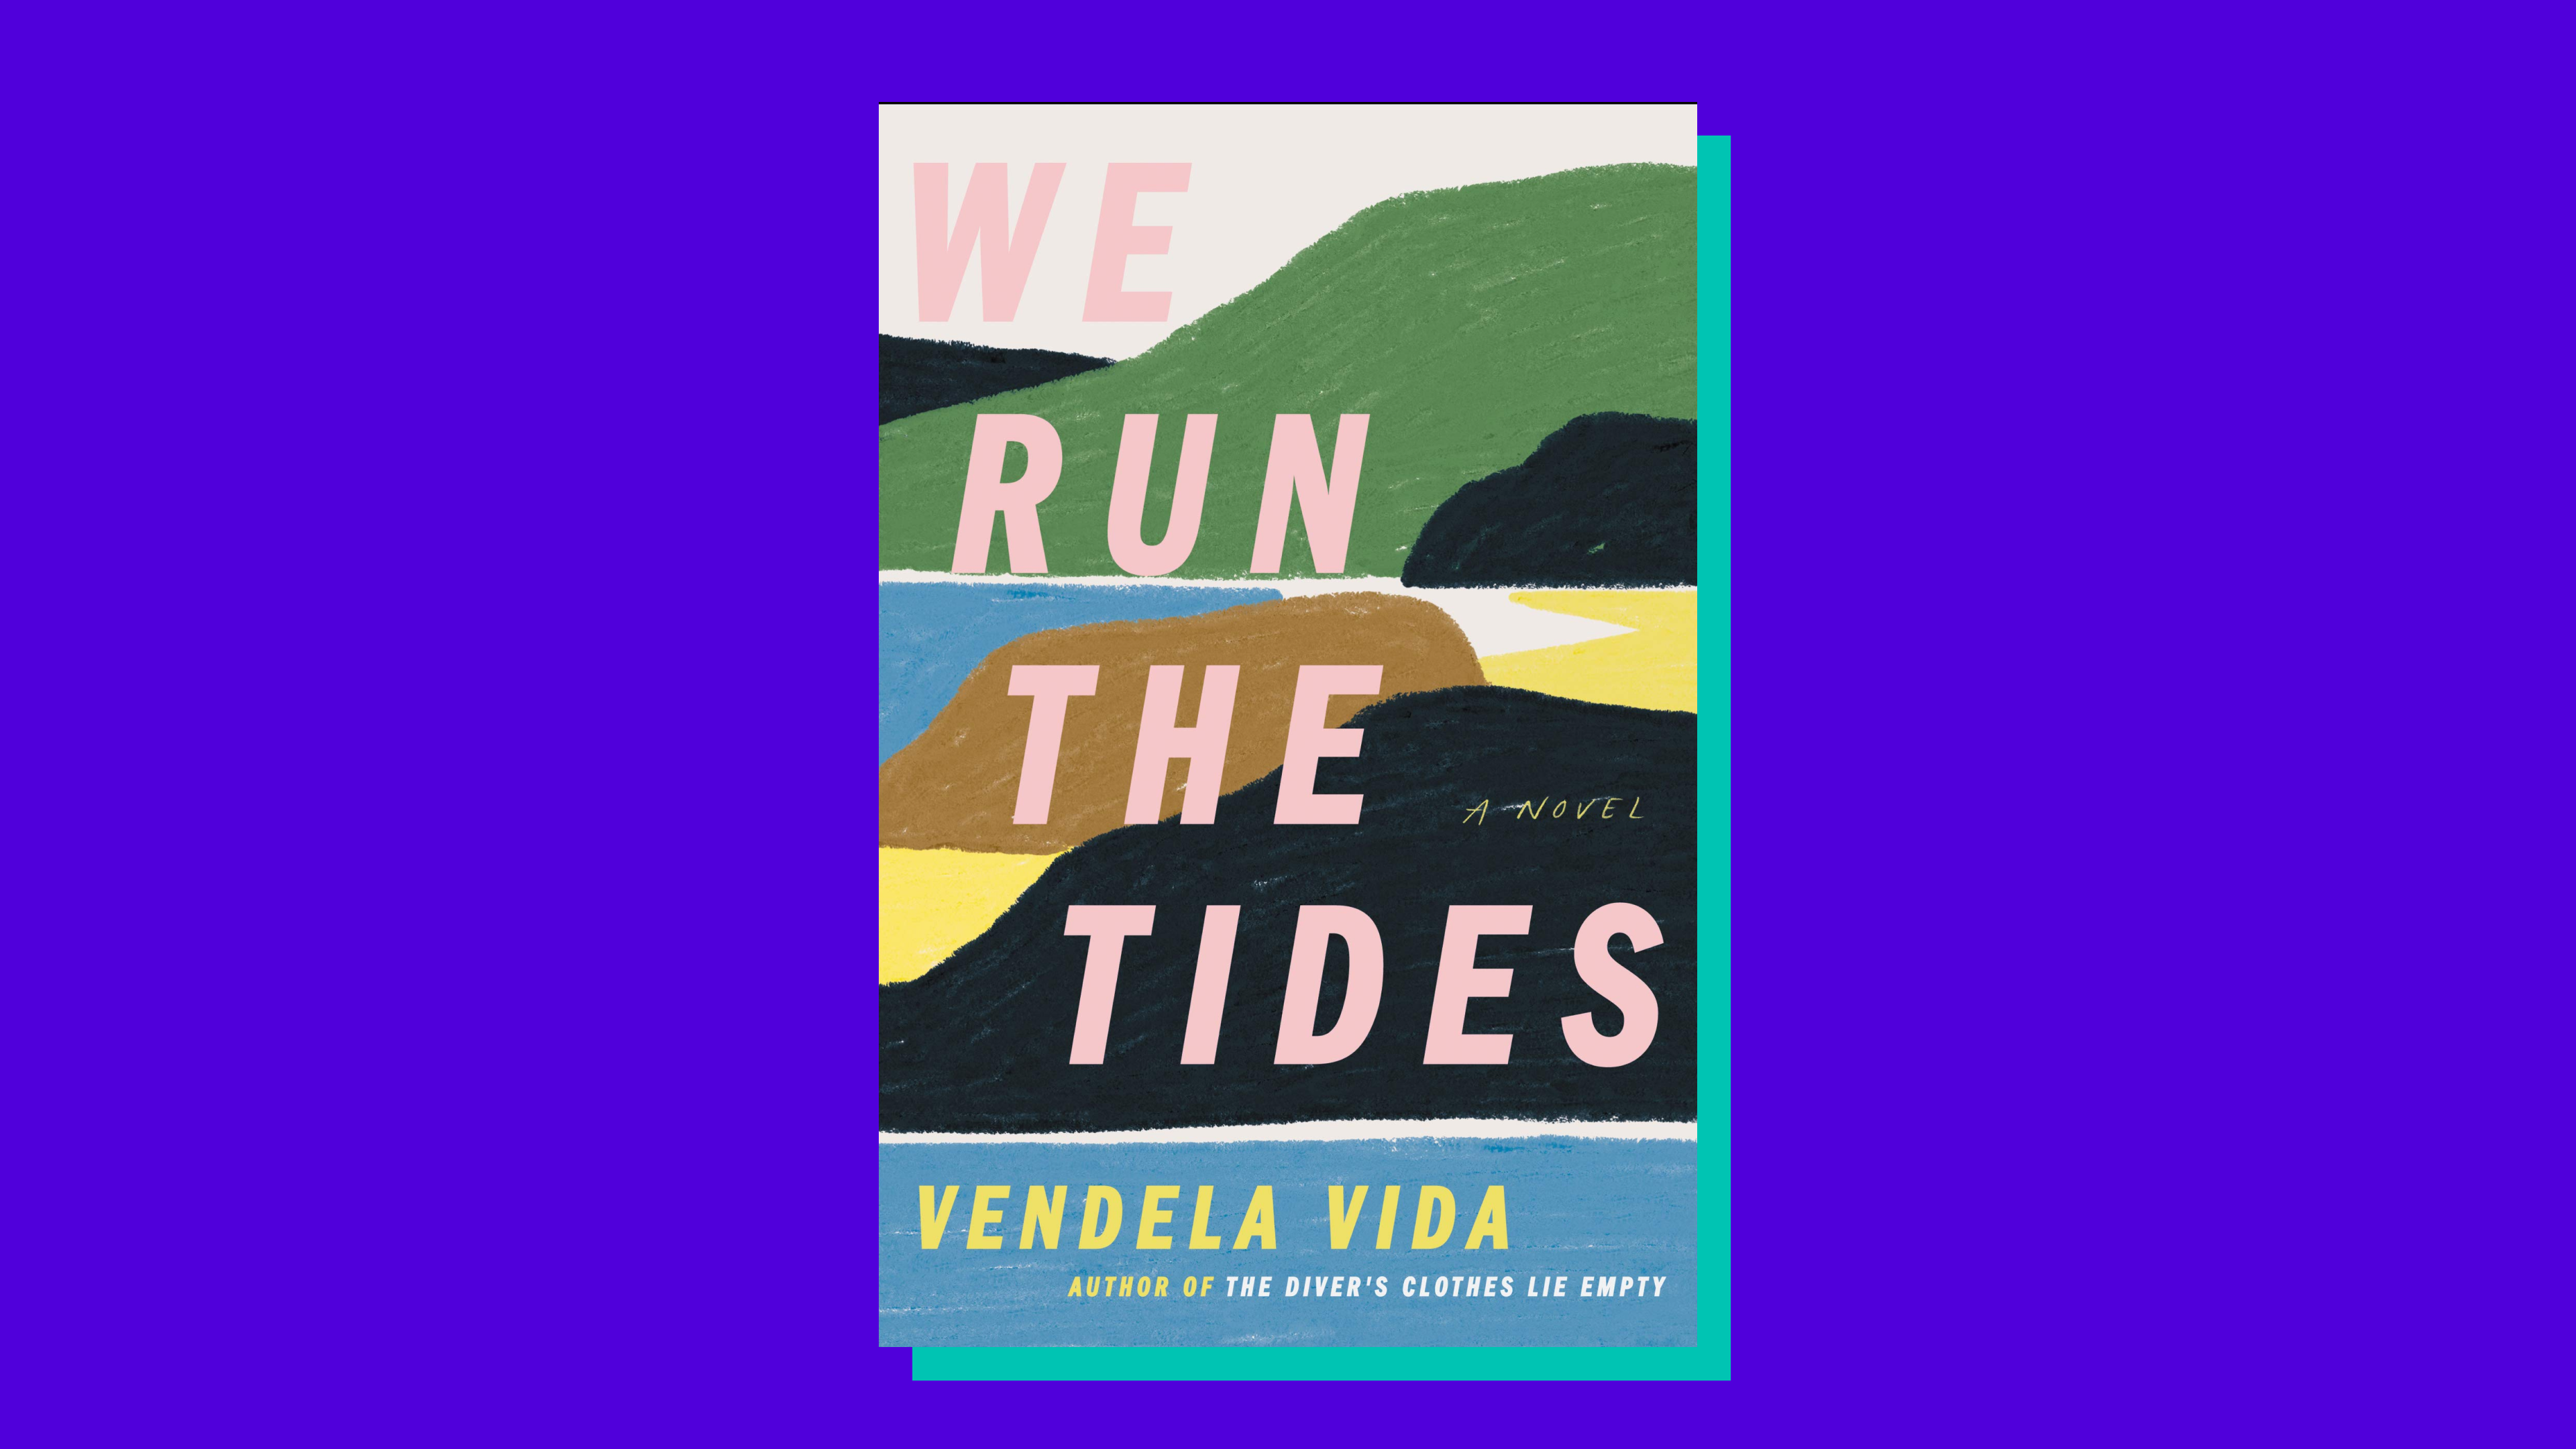 "We Run the Tides” by Vendela Vida